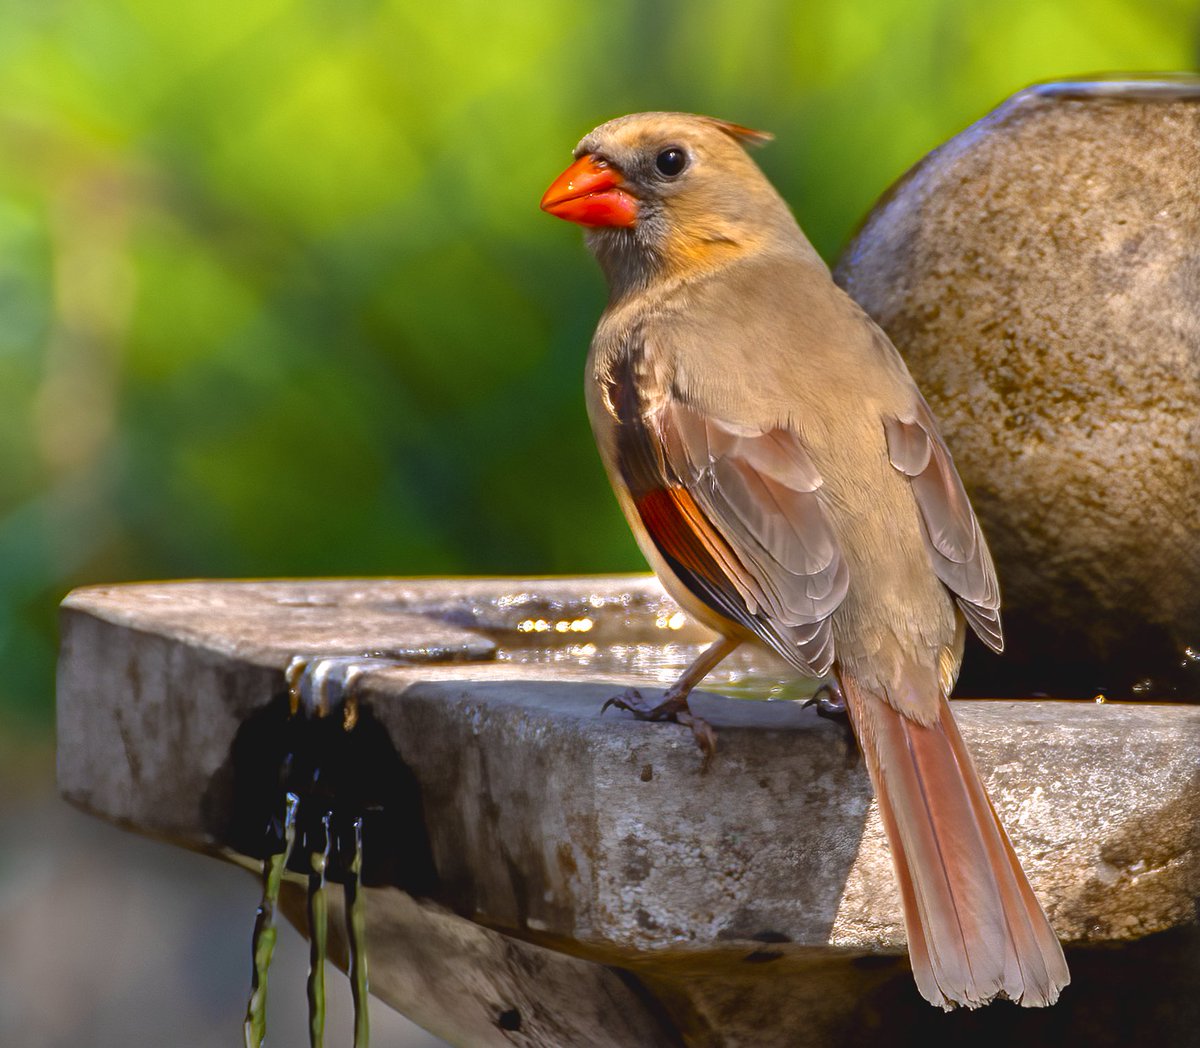 Female Northern Cardinal, visiting our water fountain. #birdwatching #birdphotography #naturephotography